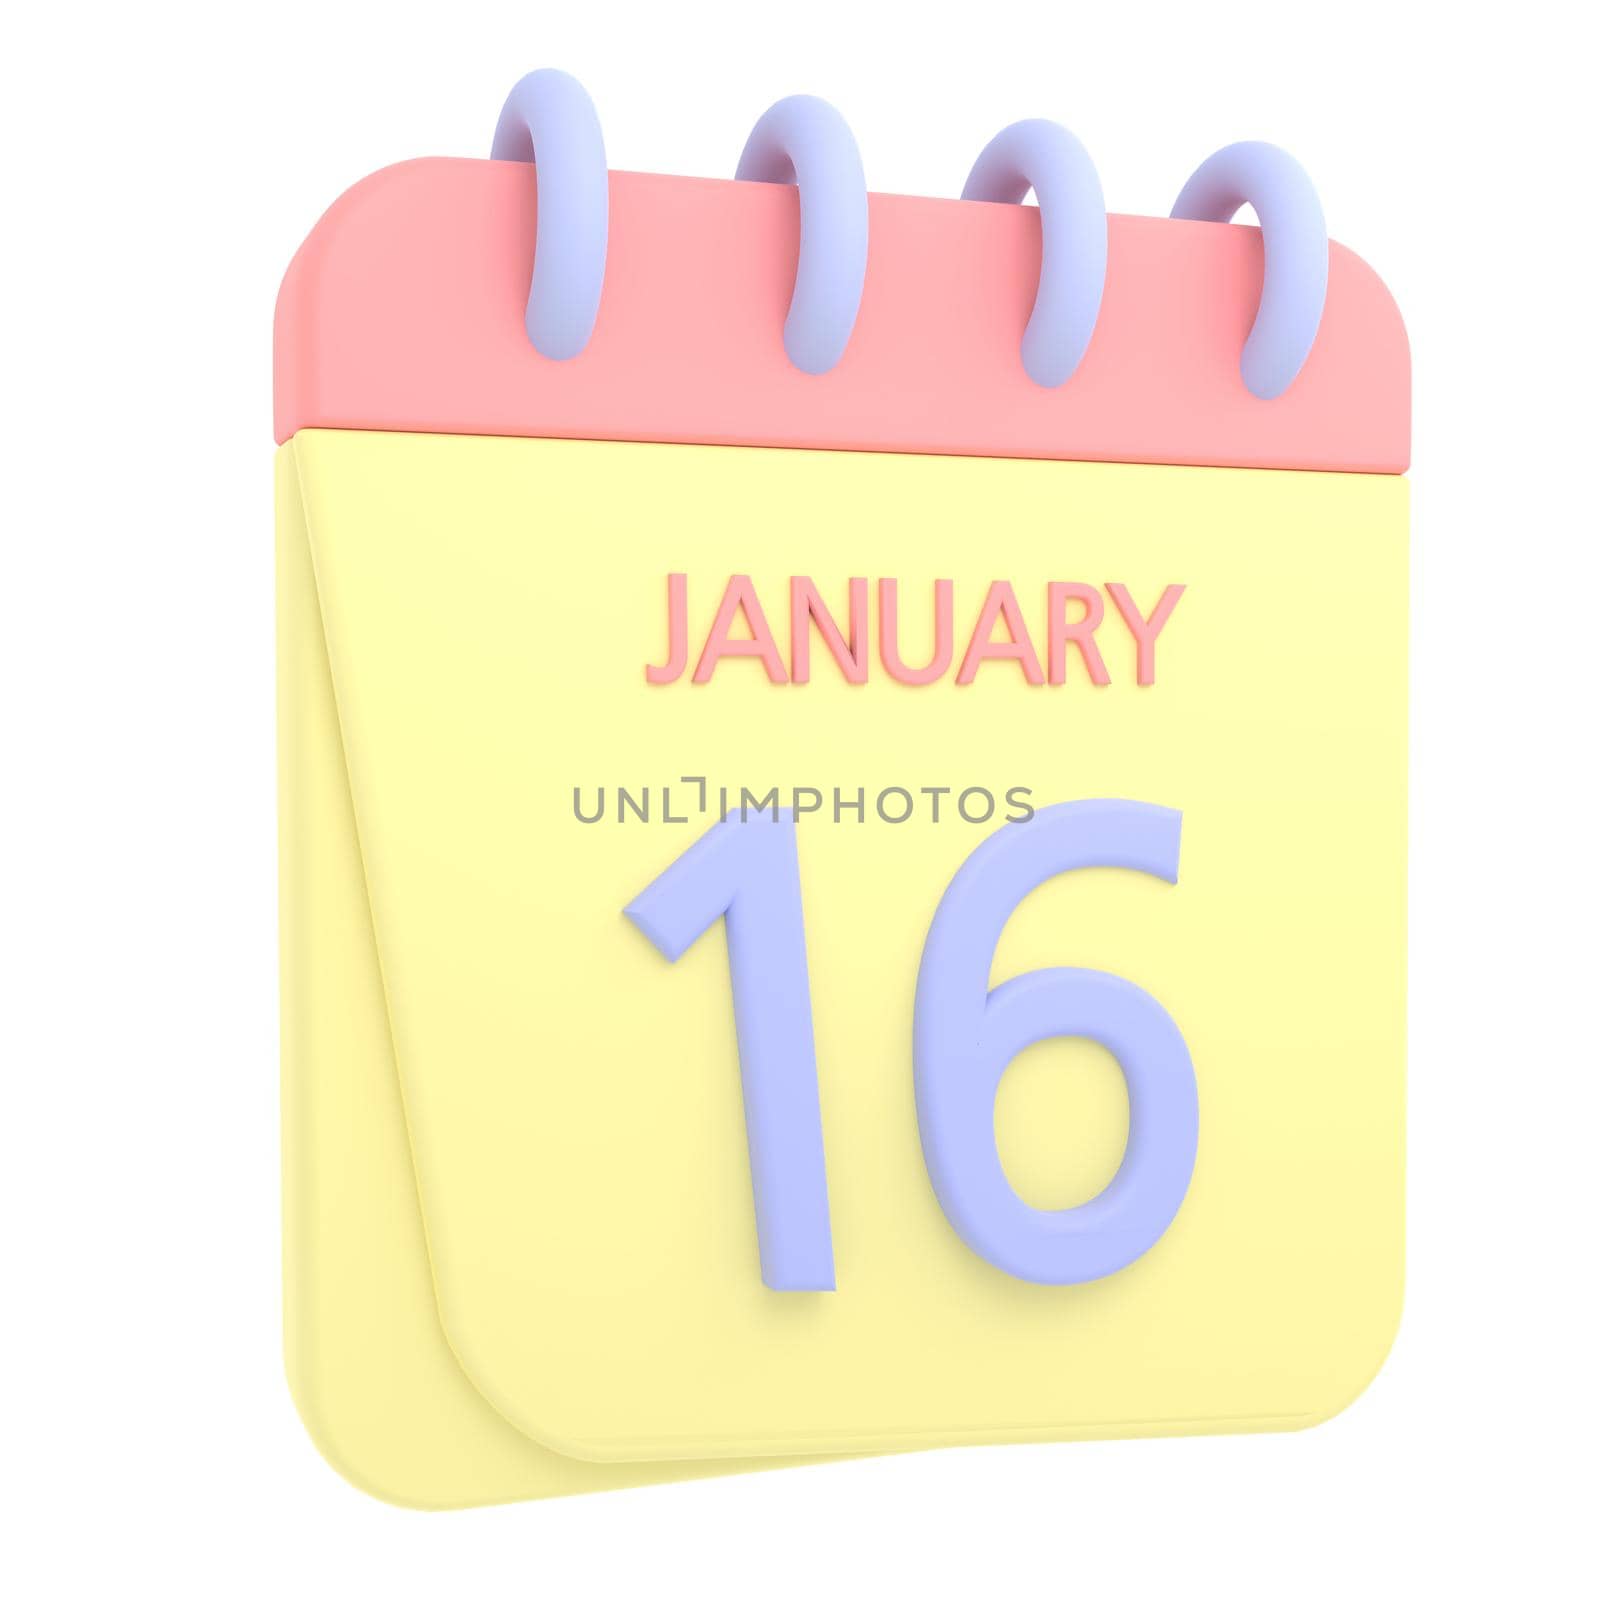 16th January 3D calendar icon by AnnaMarin